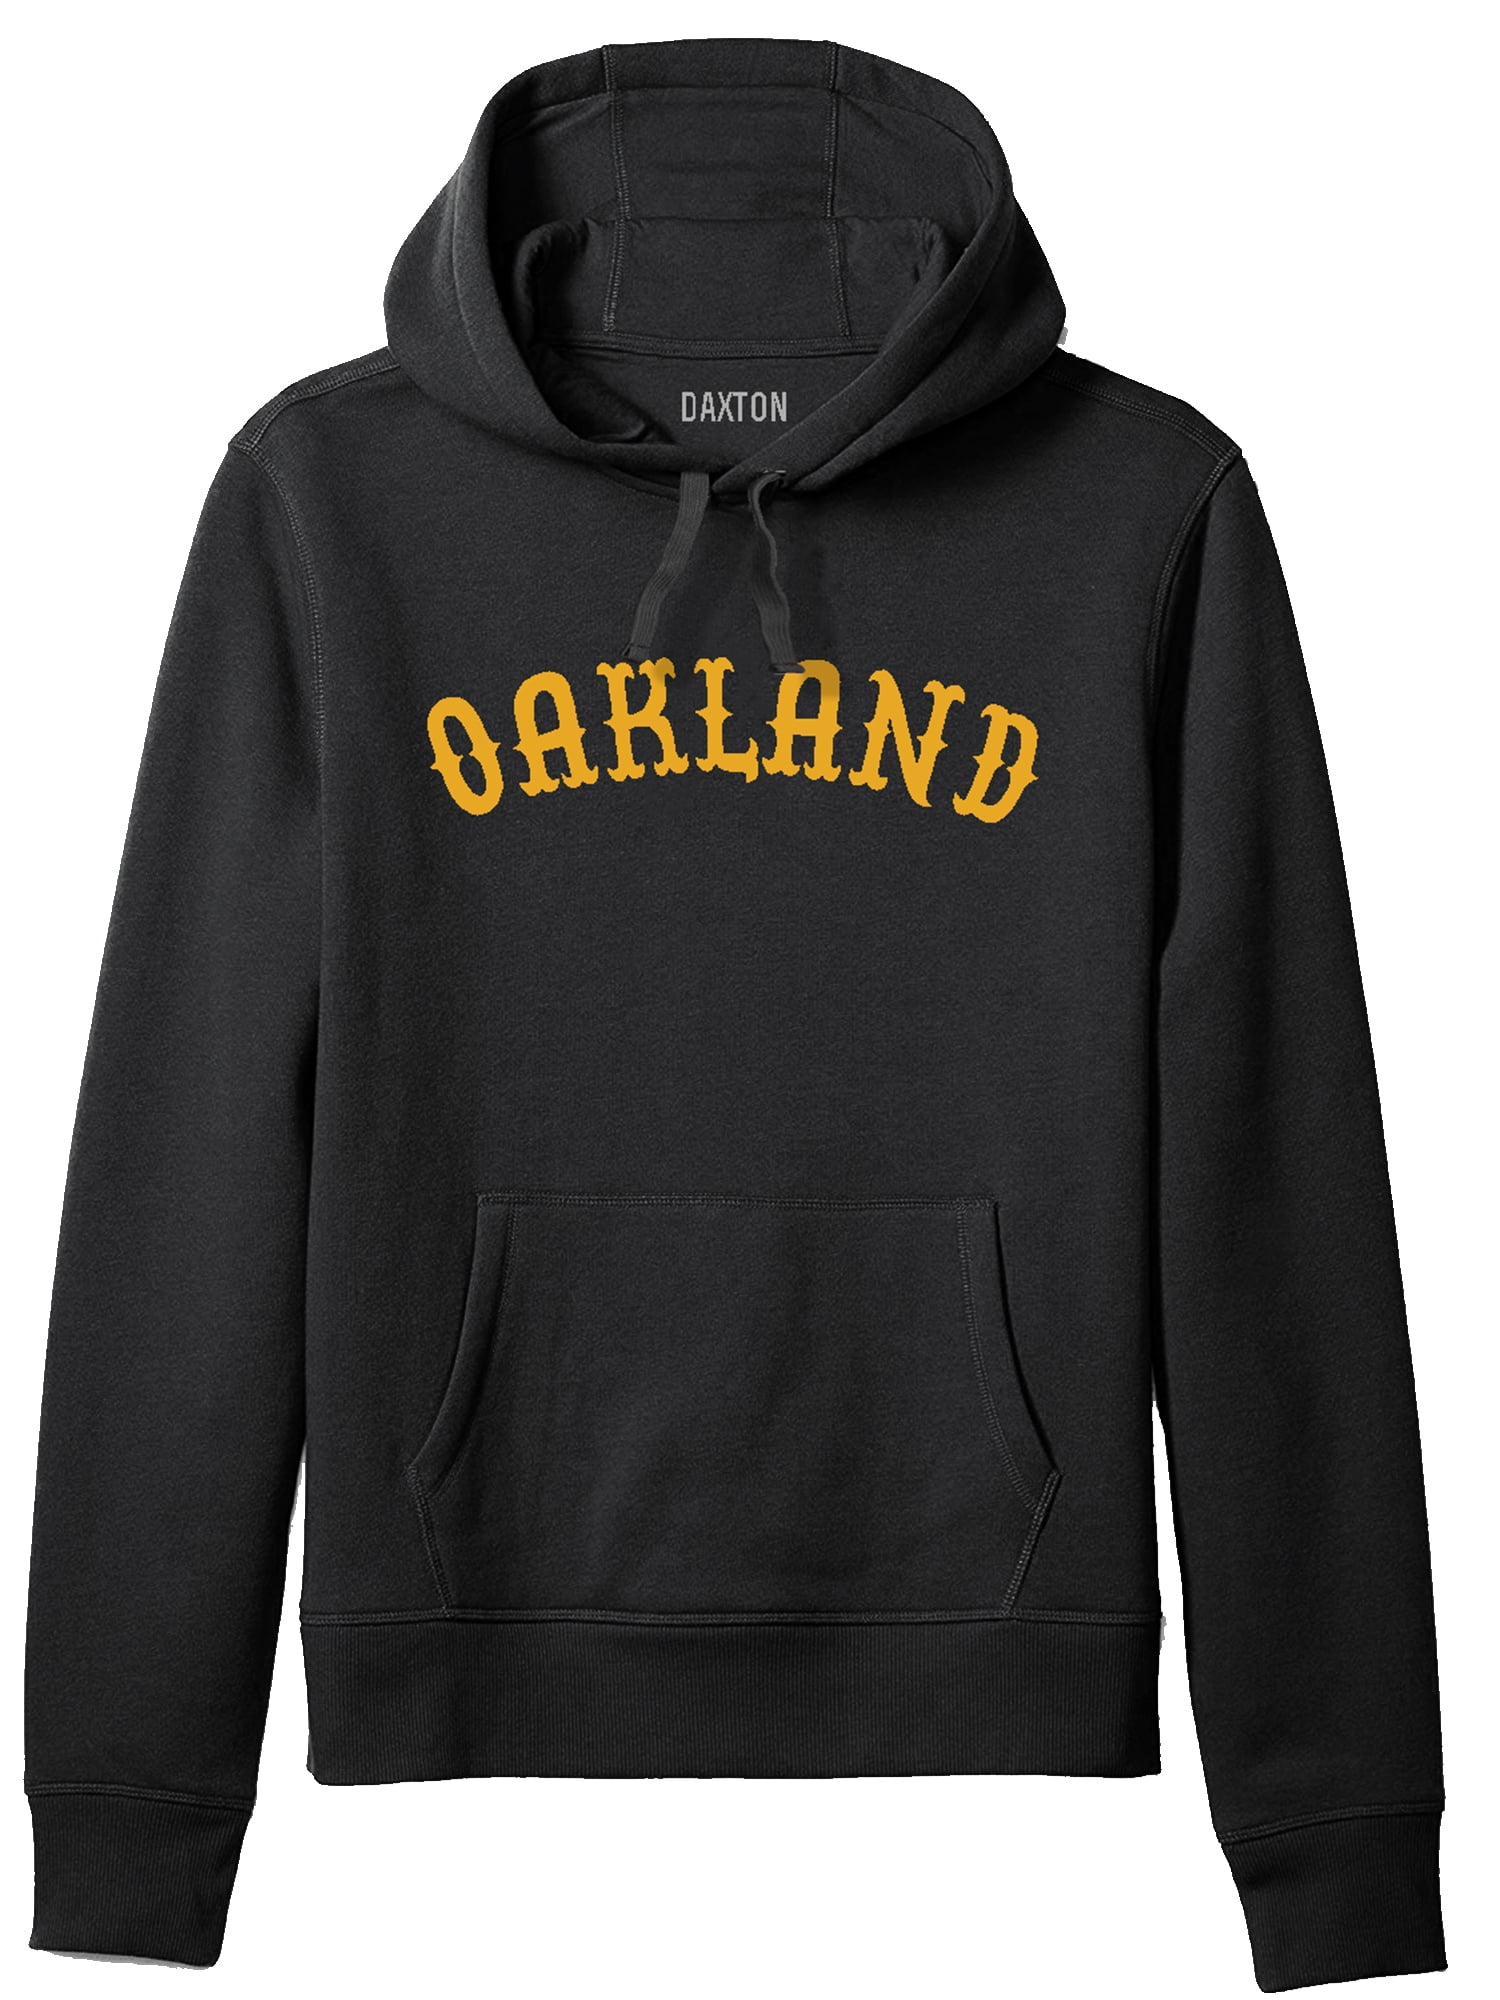 oakland usa hoodie